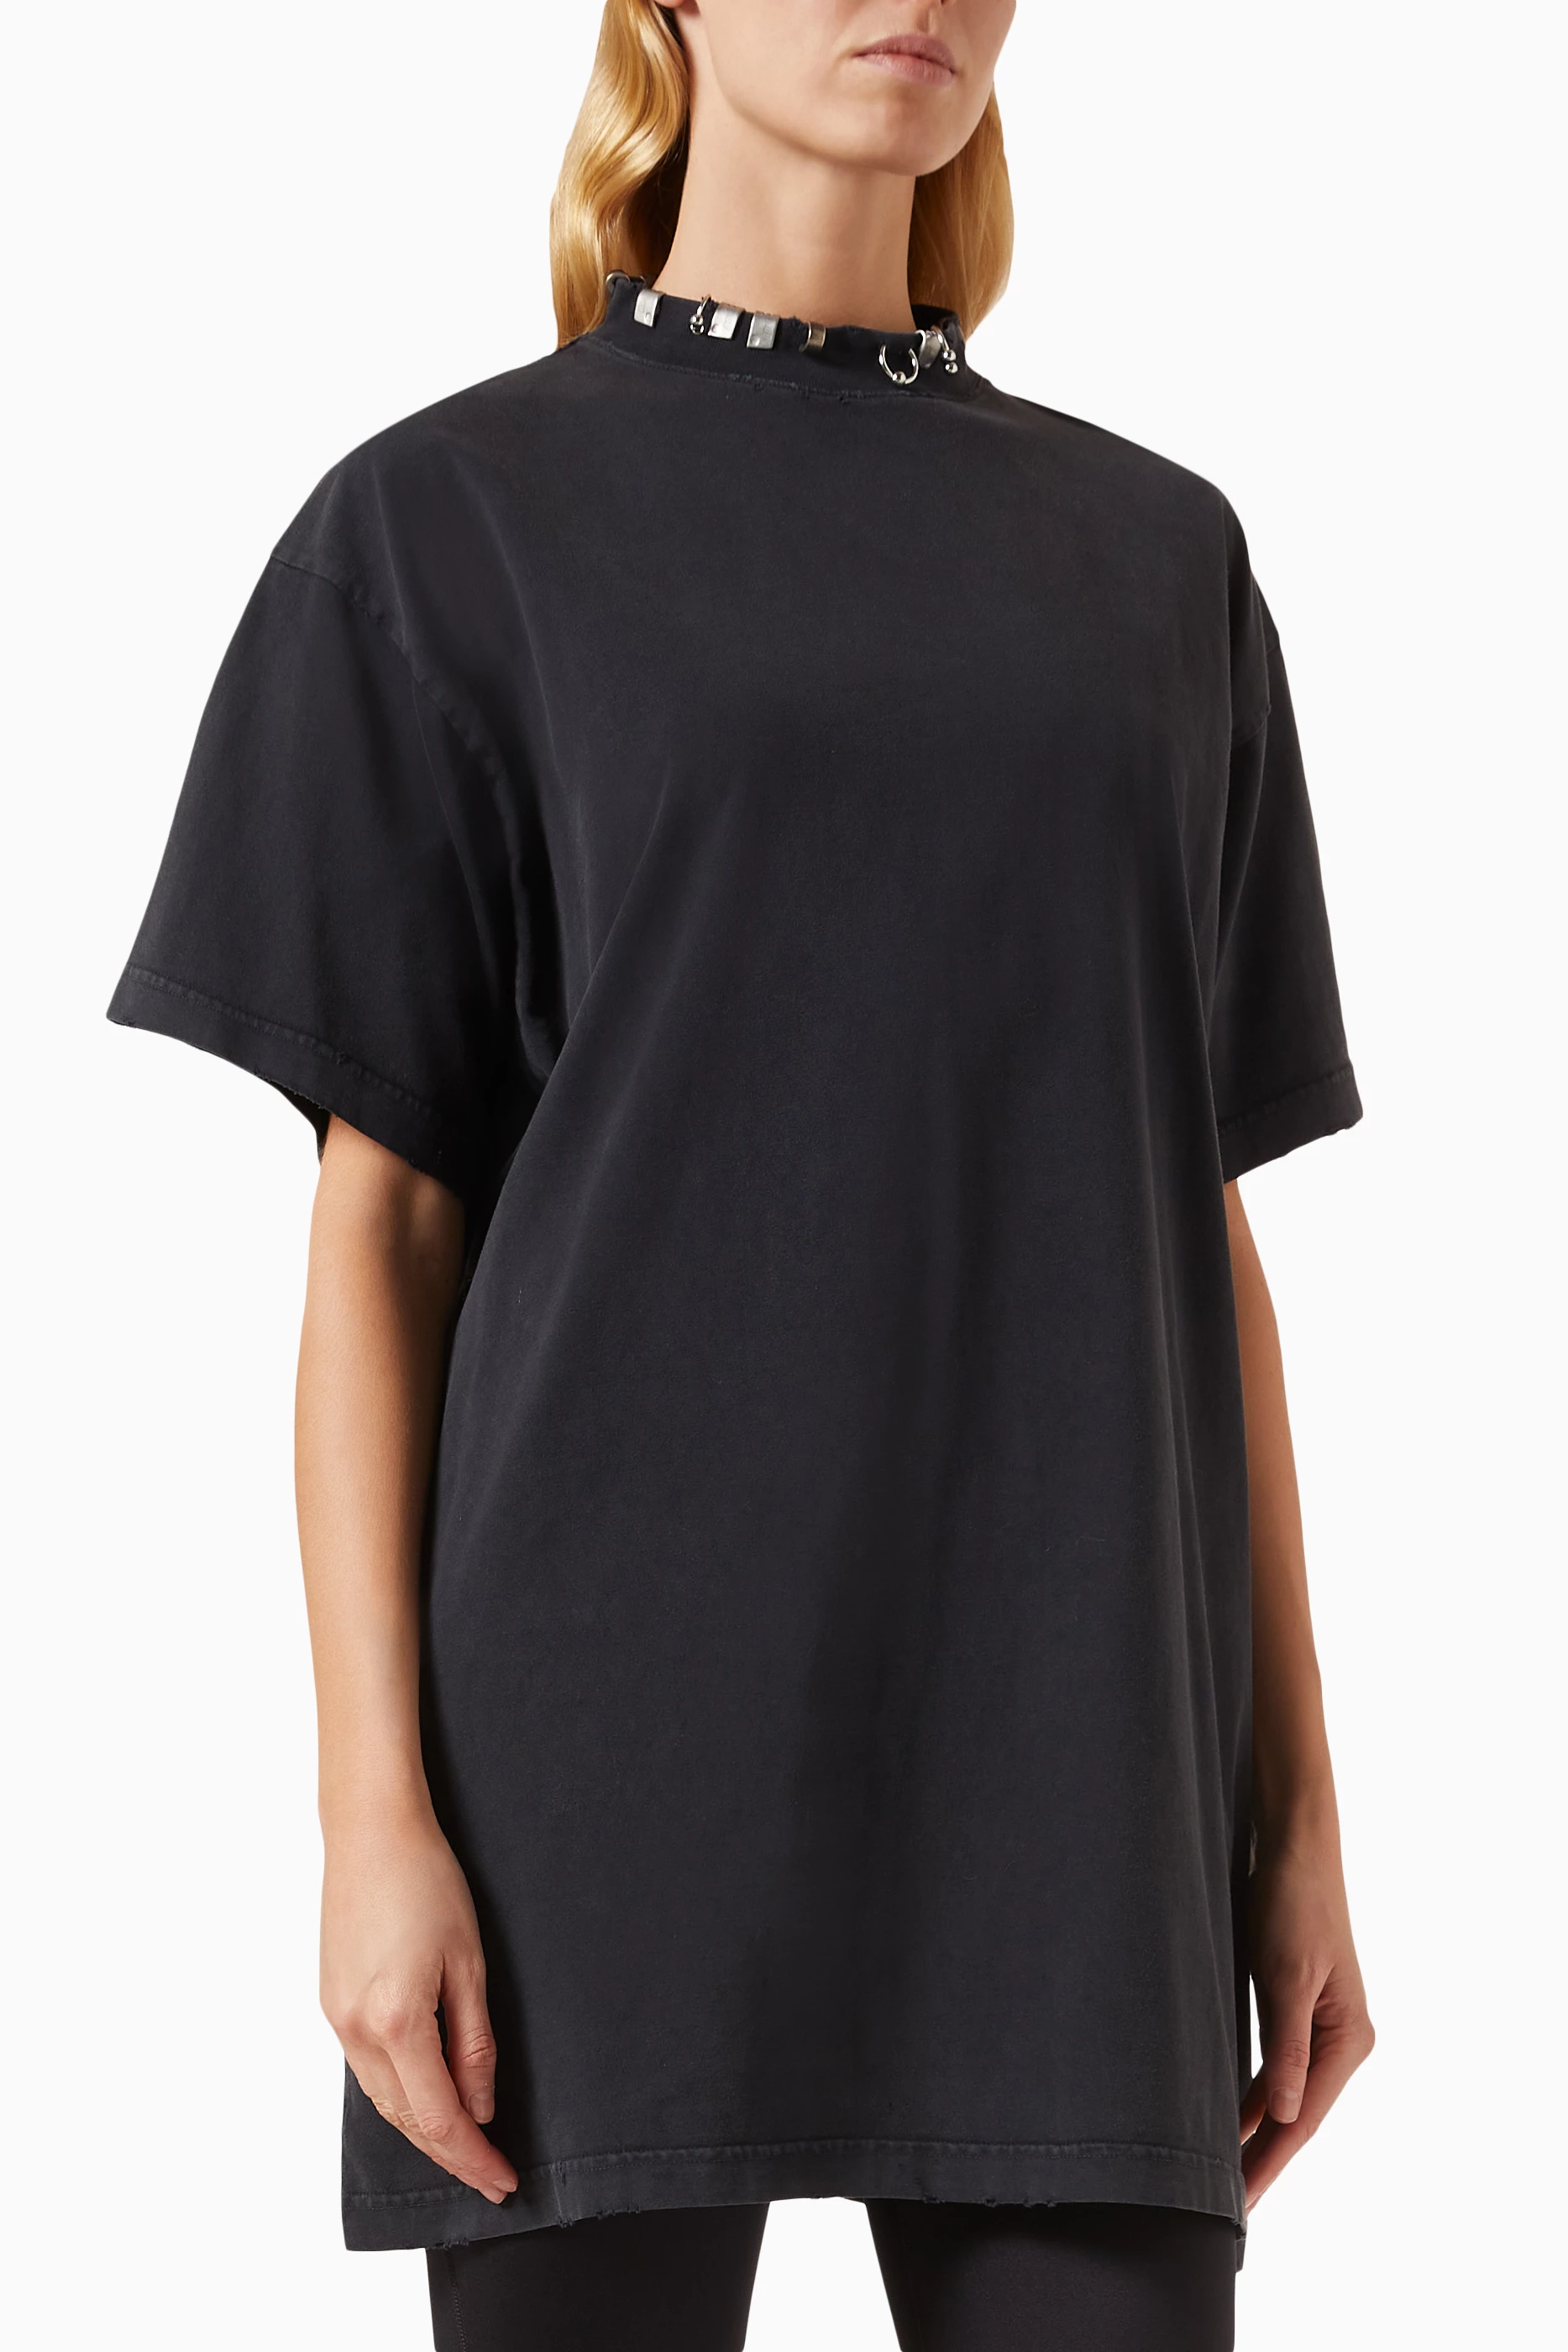 Balenciaga Pierced distressed-effect cotton T-shirt, Black